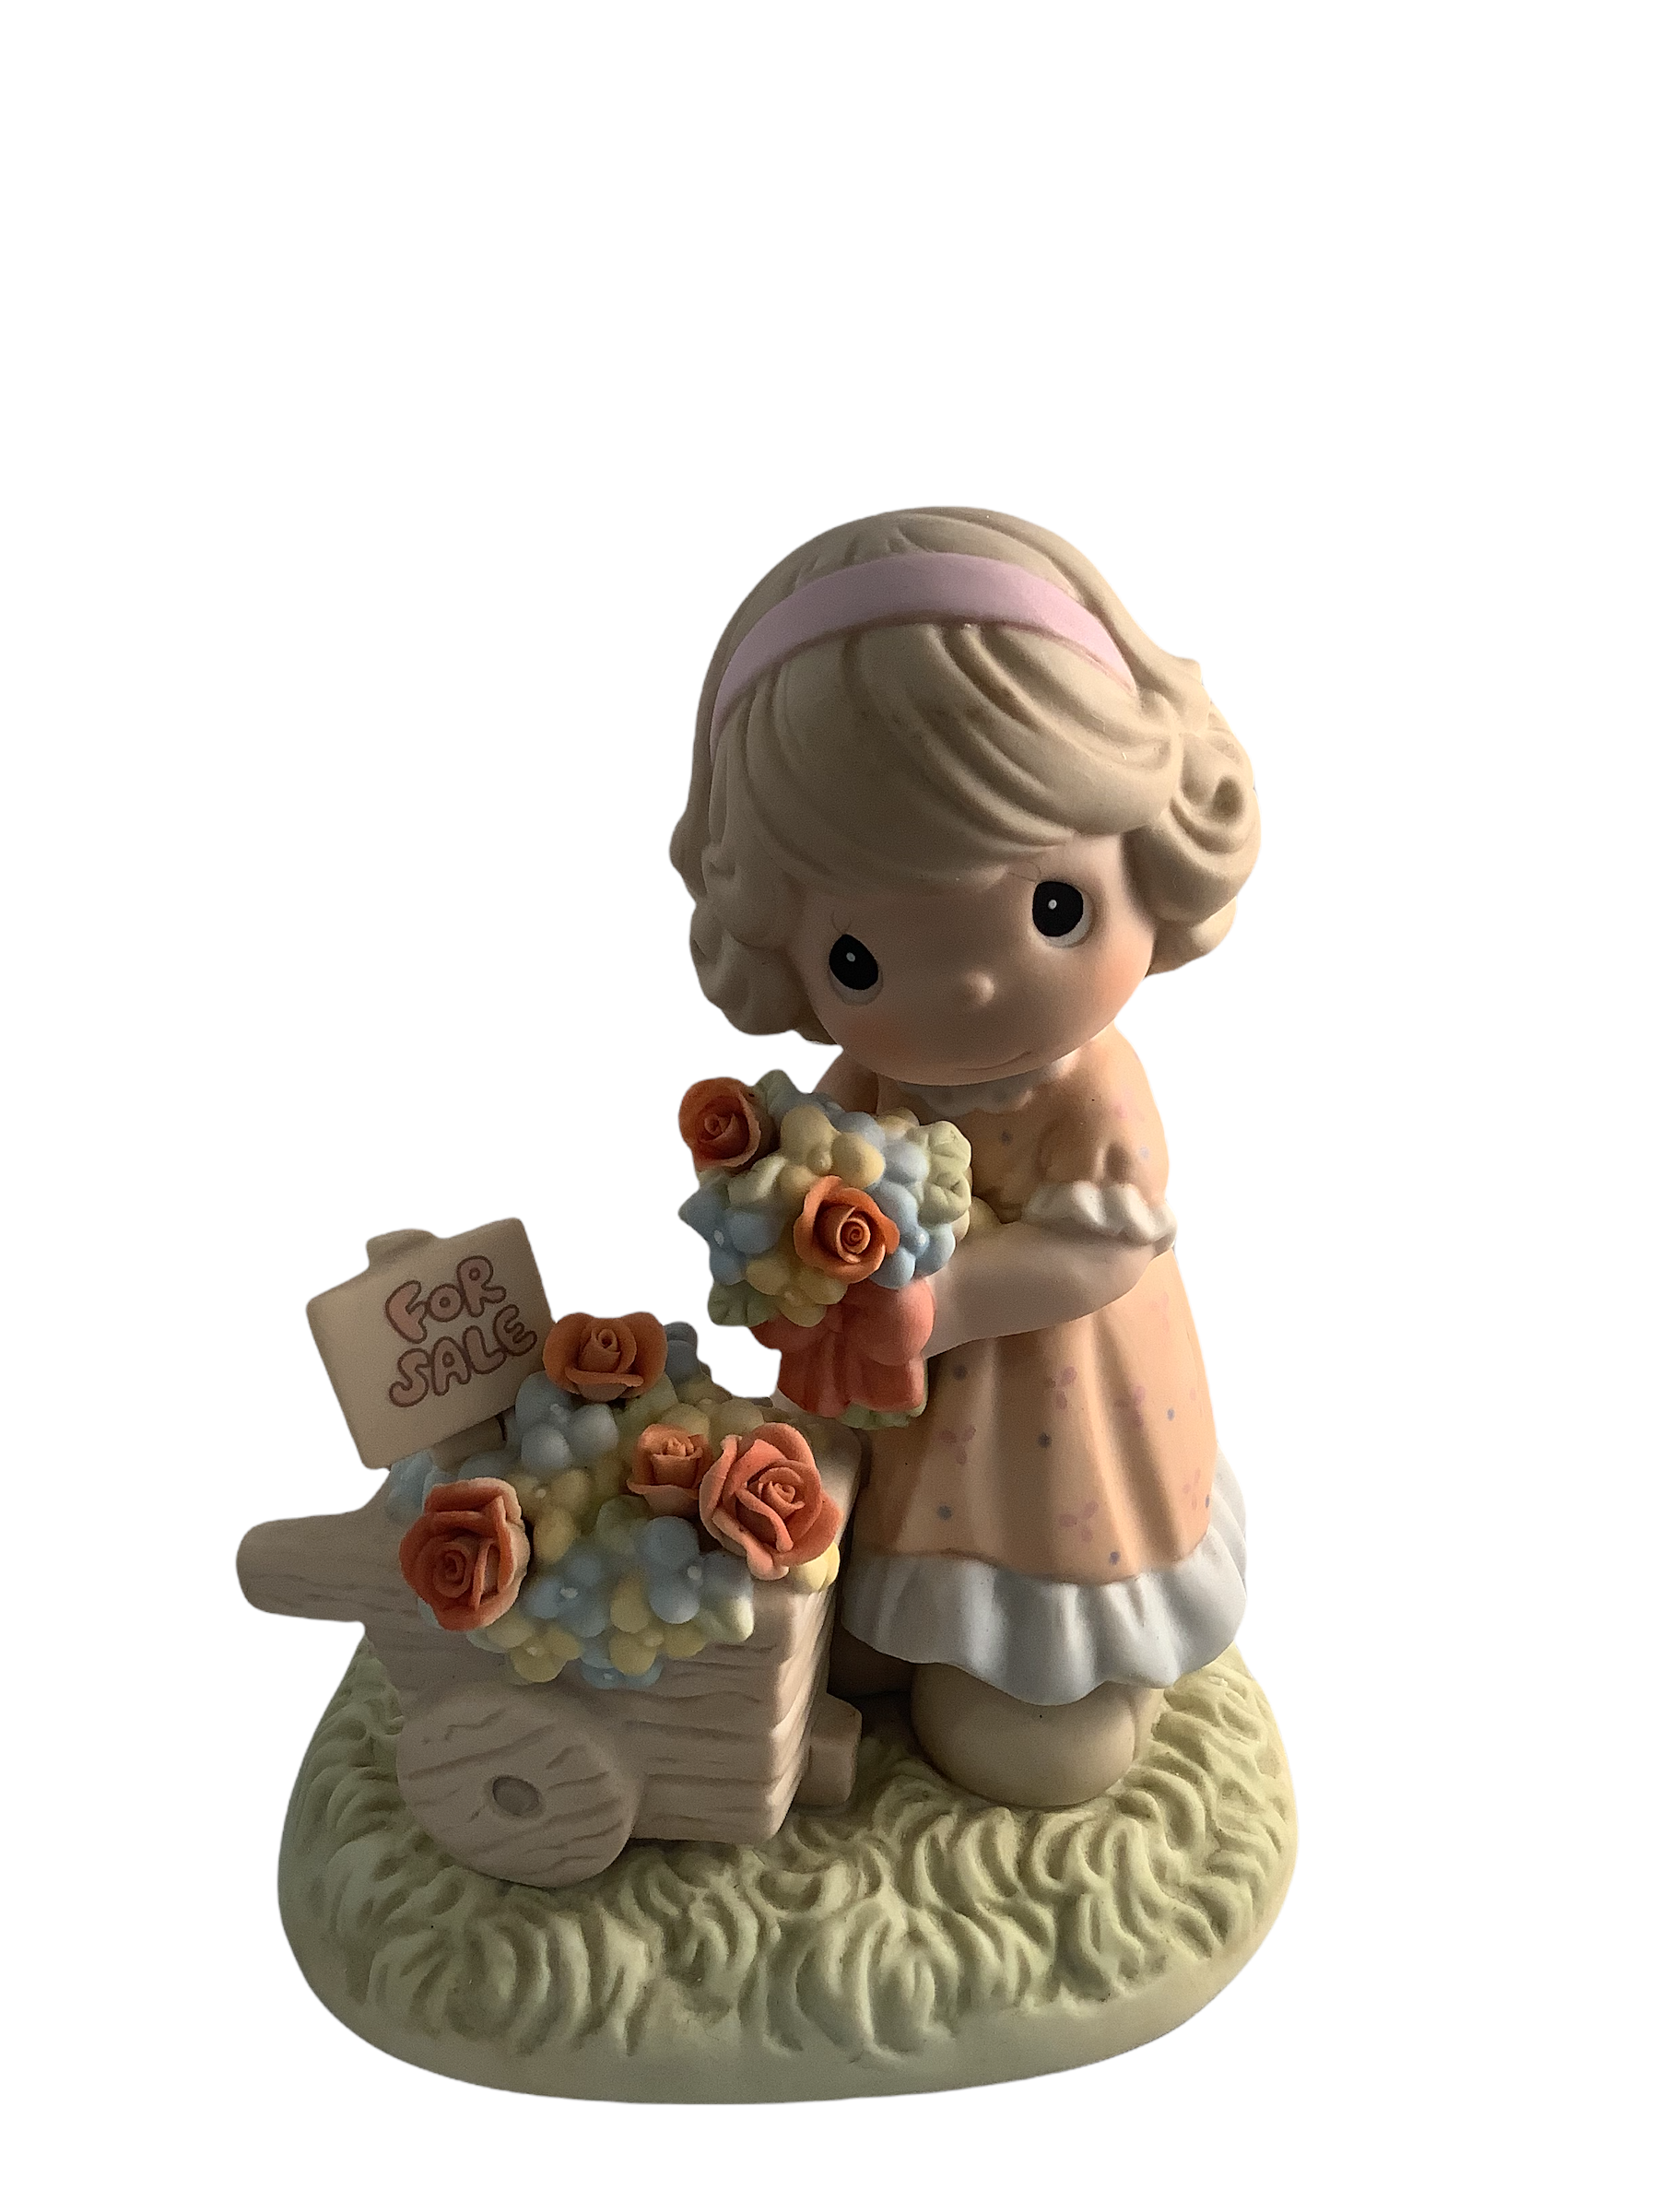 June - Rose “Beautiful” - Precious Moment Figurine